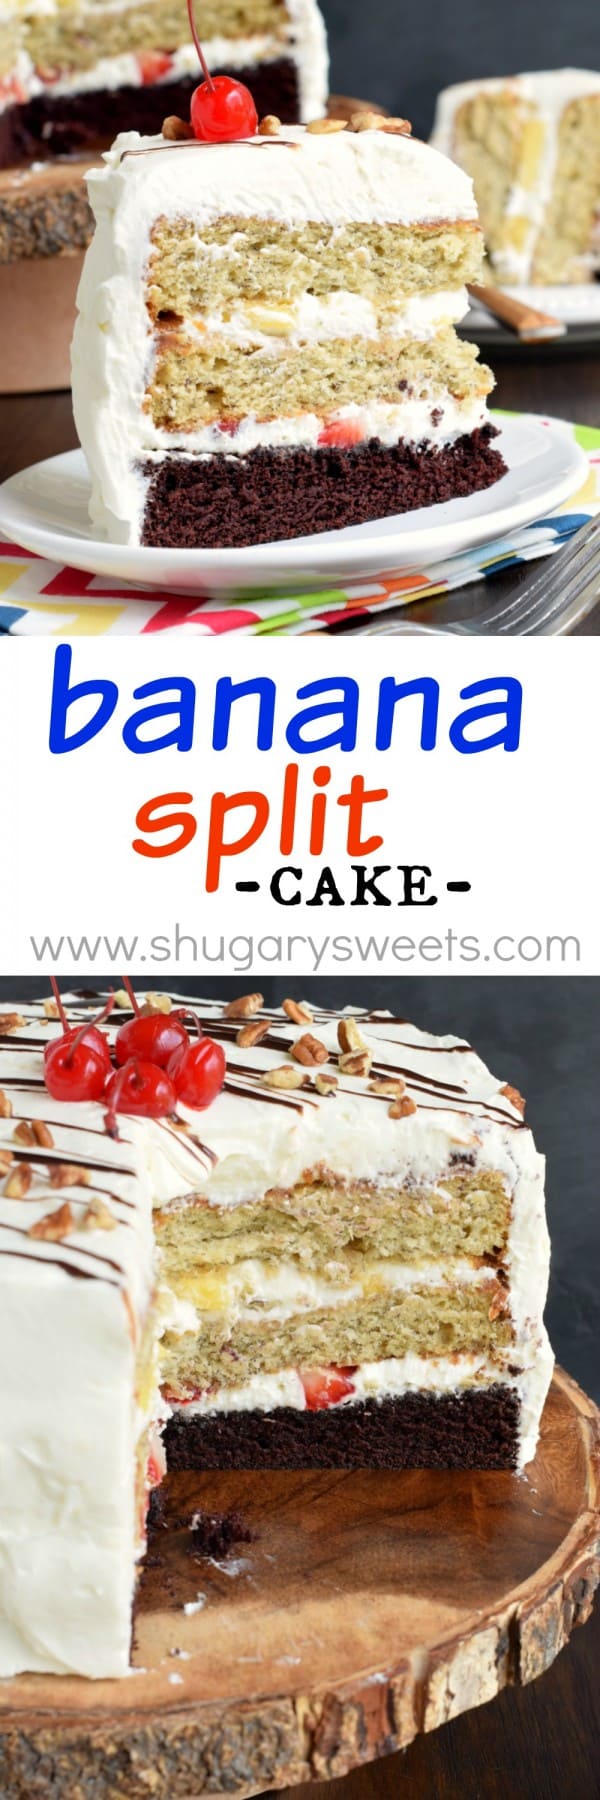 Banana Split Cake - Shugary Sweets